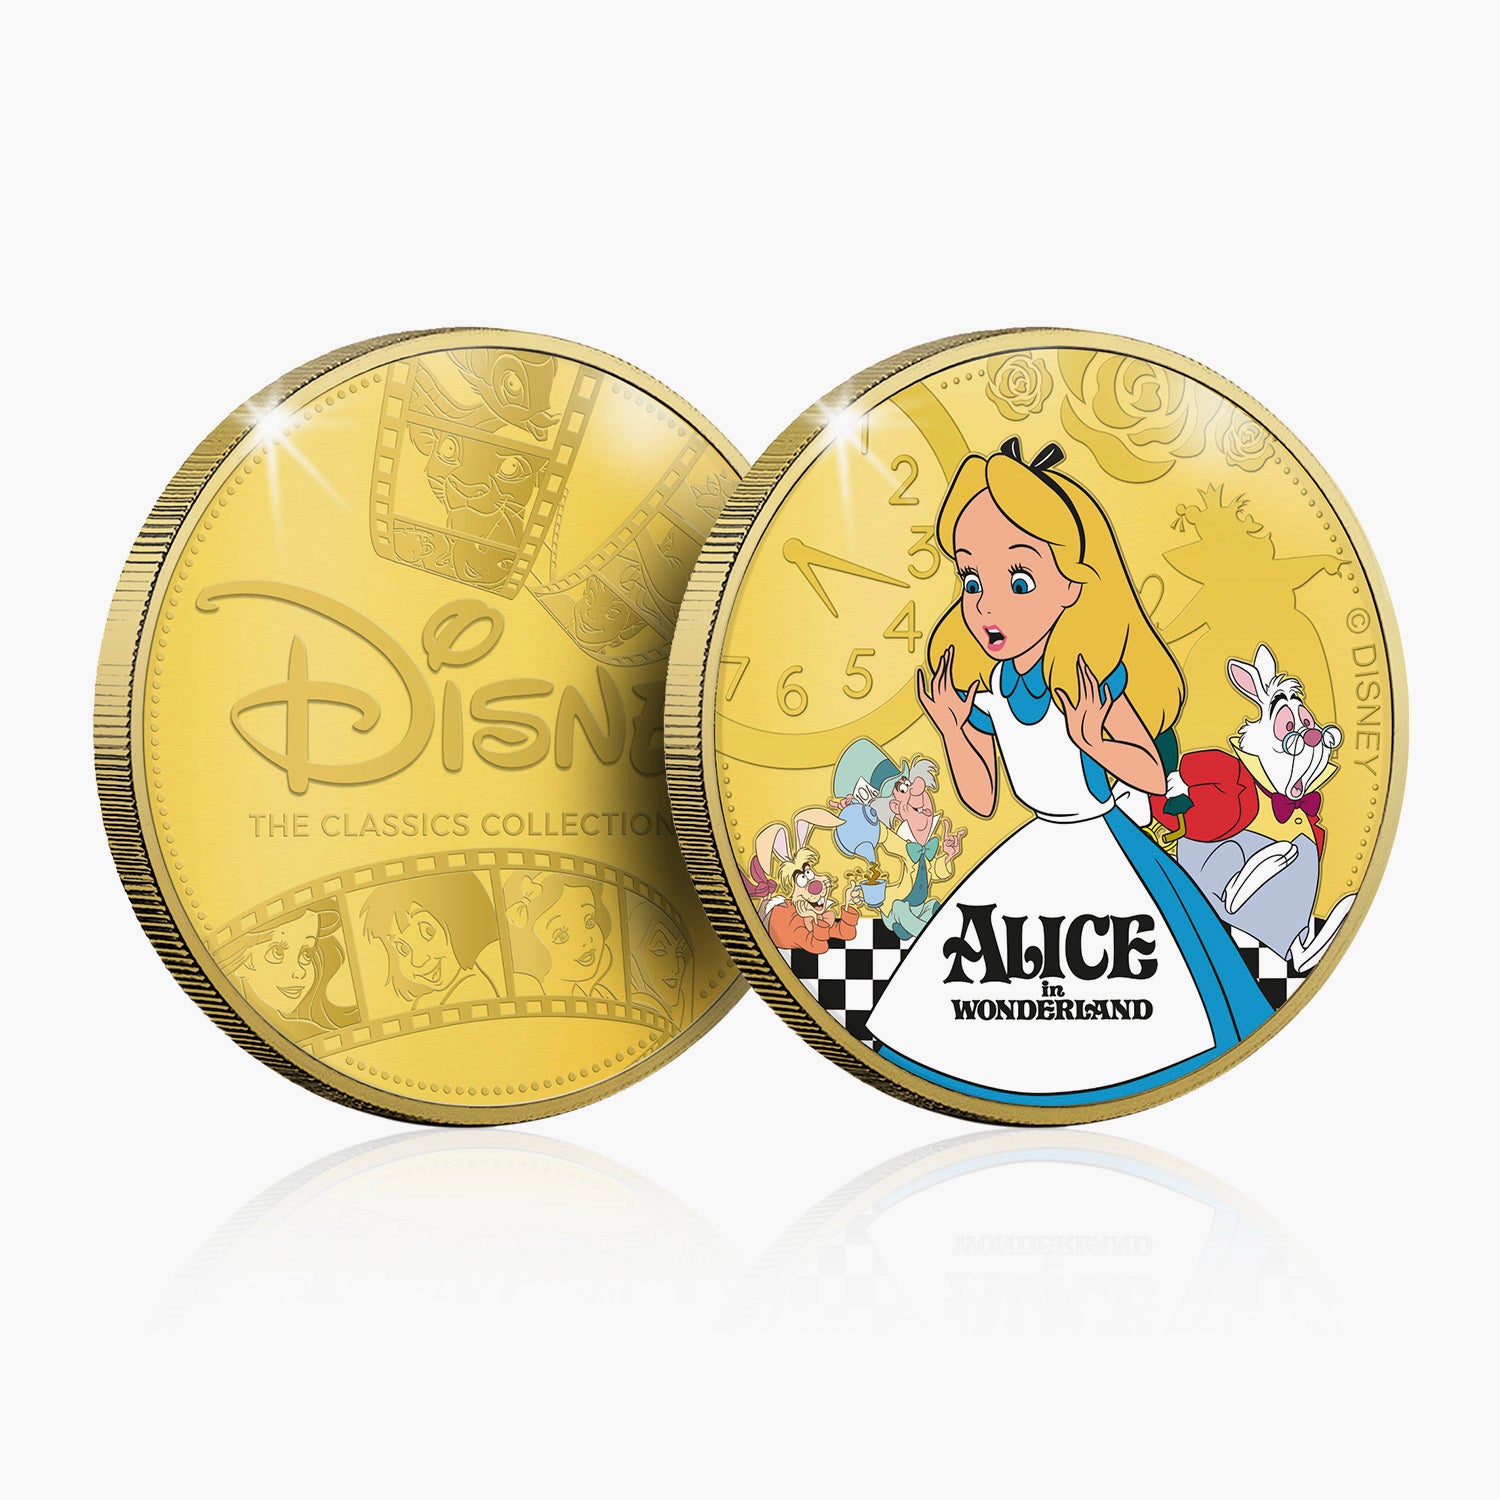 Alice In Wonderland Gold-Plated Commemorative